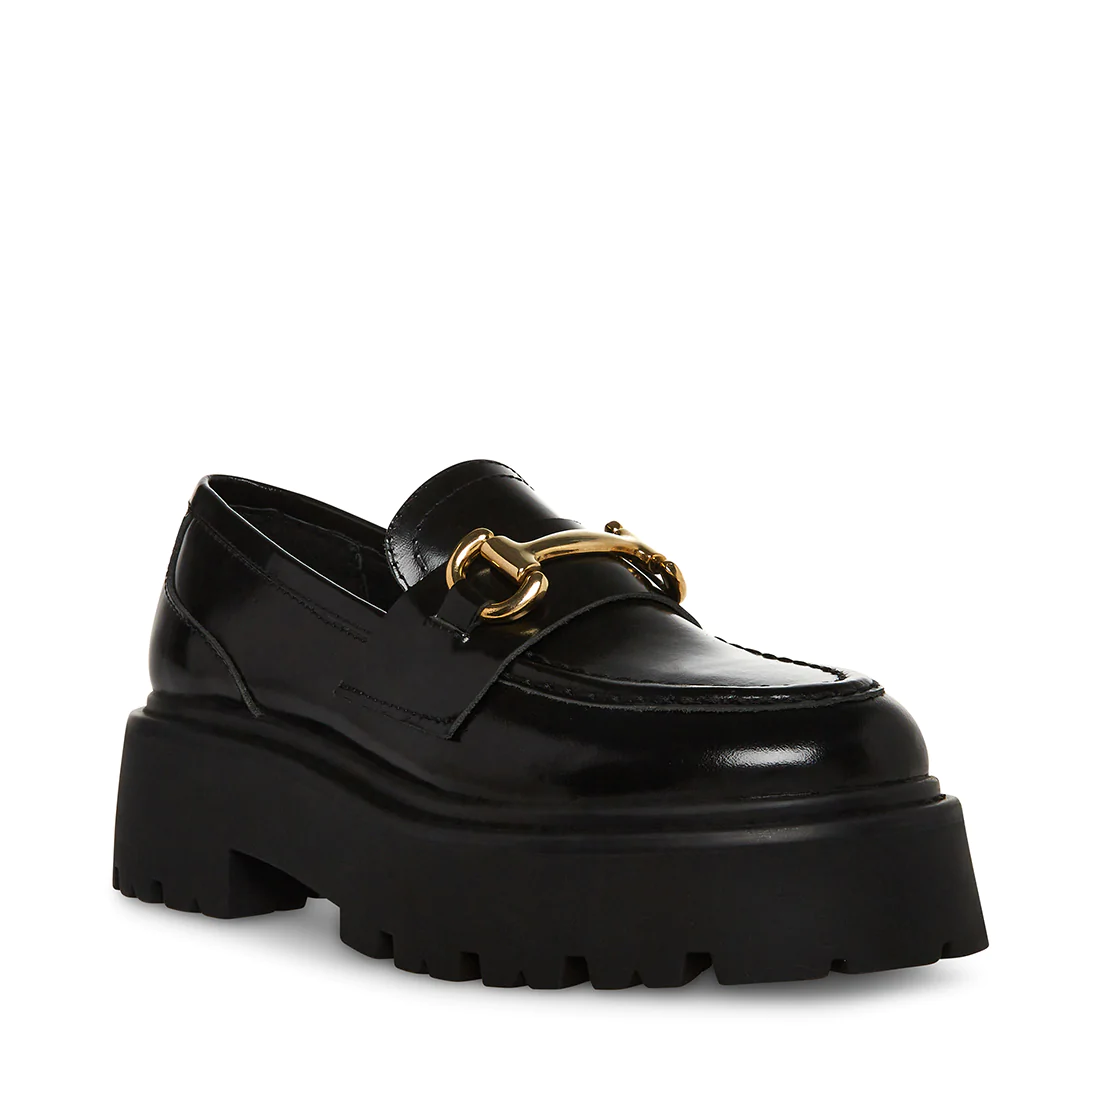 1. Steve Madden Roux Black Leather Platform Loafers